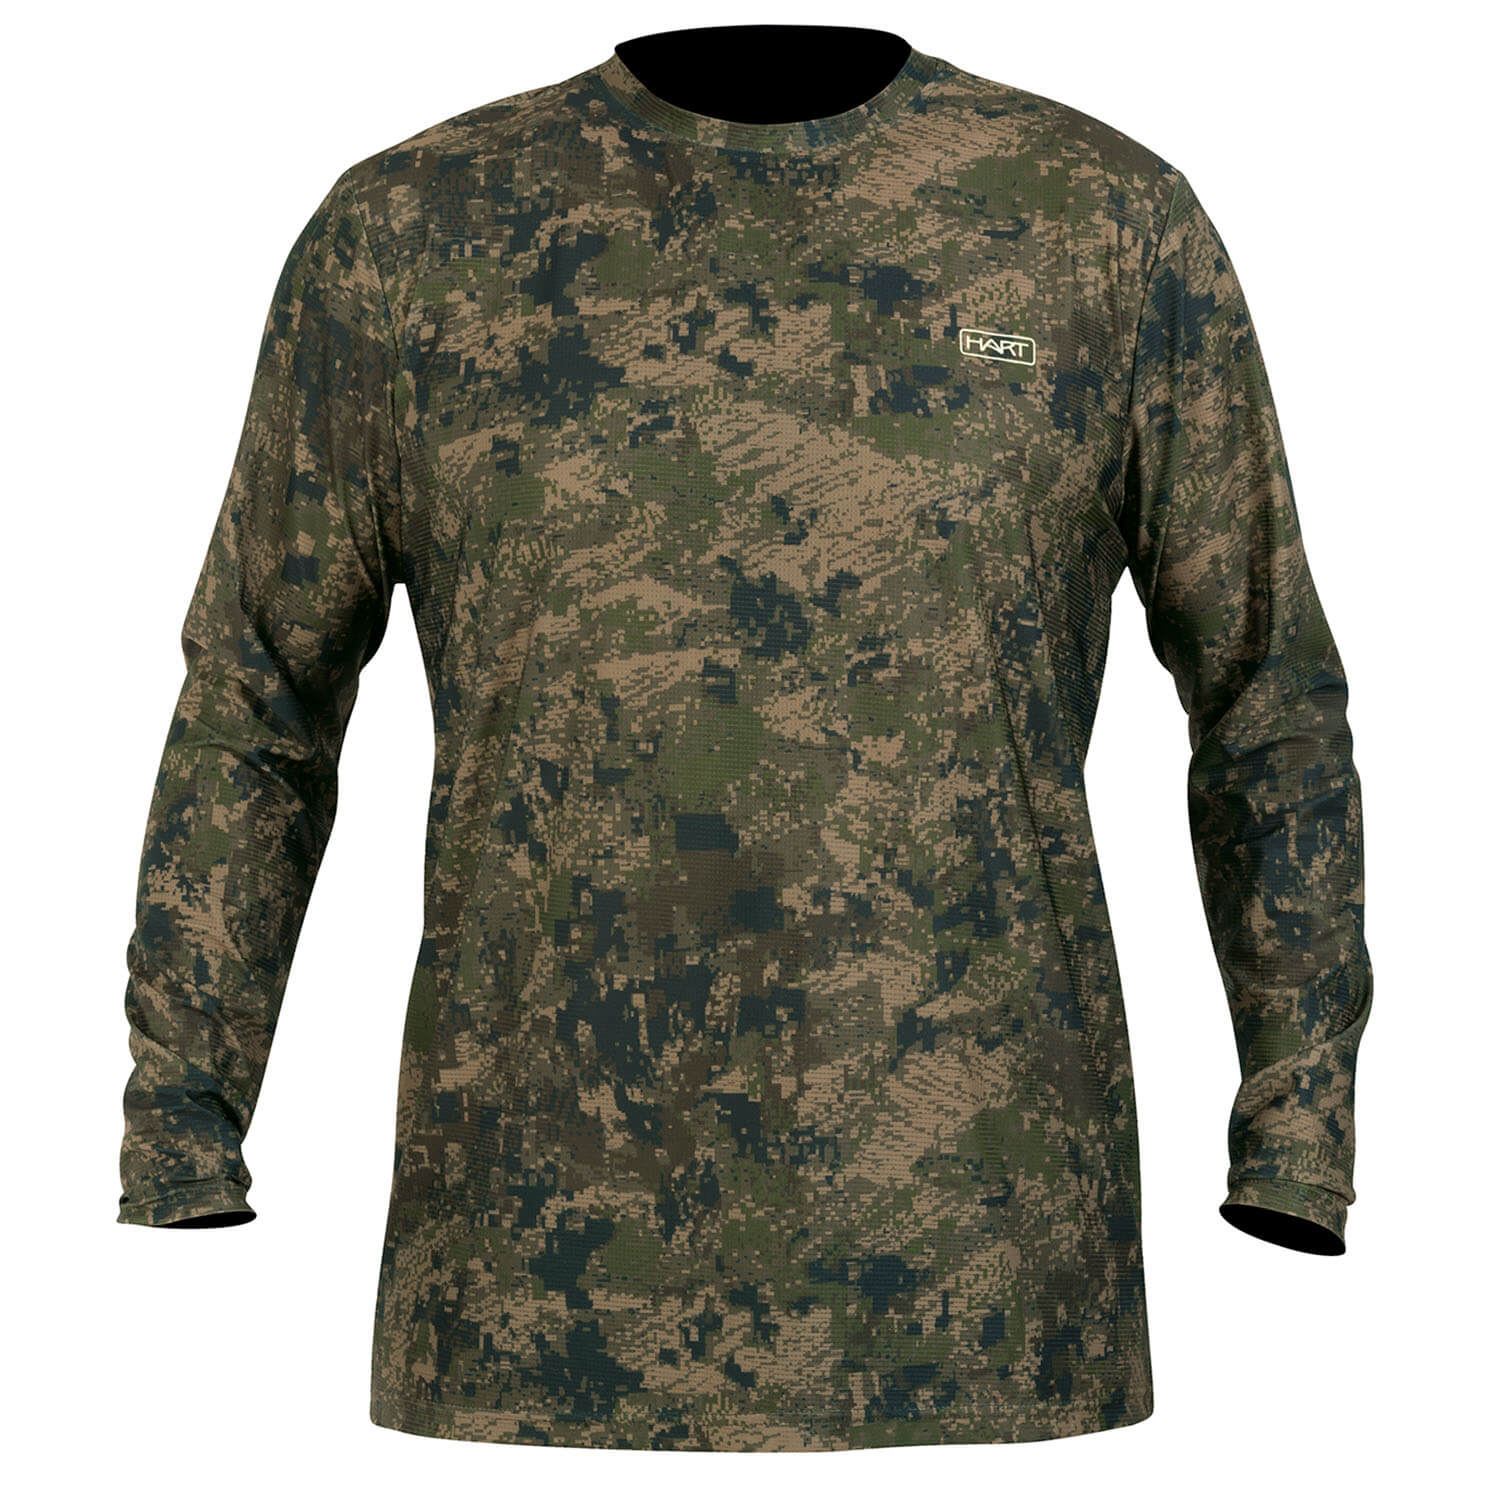  Hart Ural-TL shirt met lange mouwen - Zomer jachtkleding